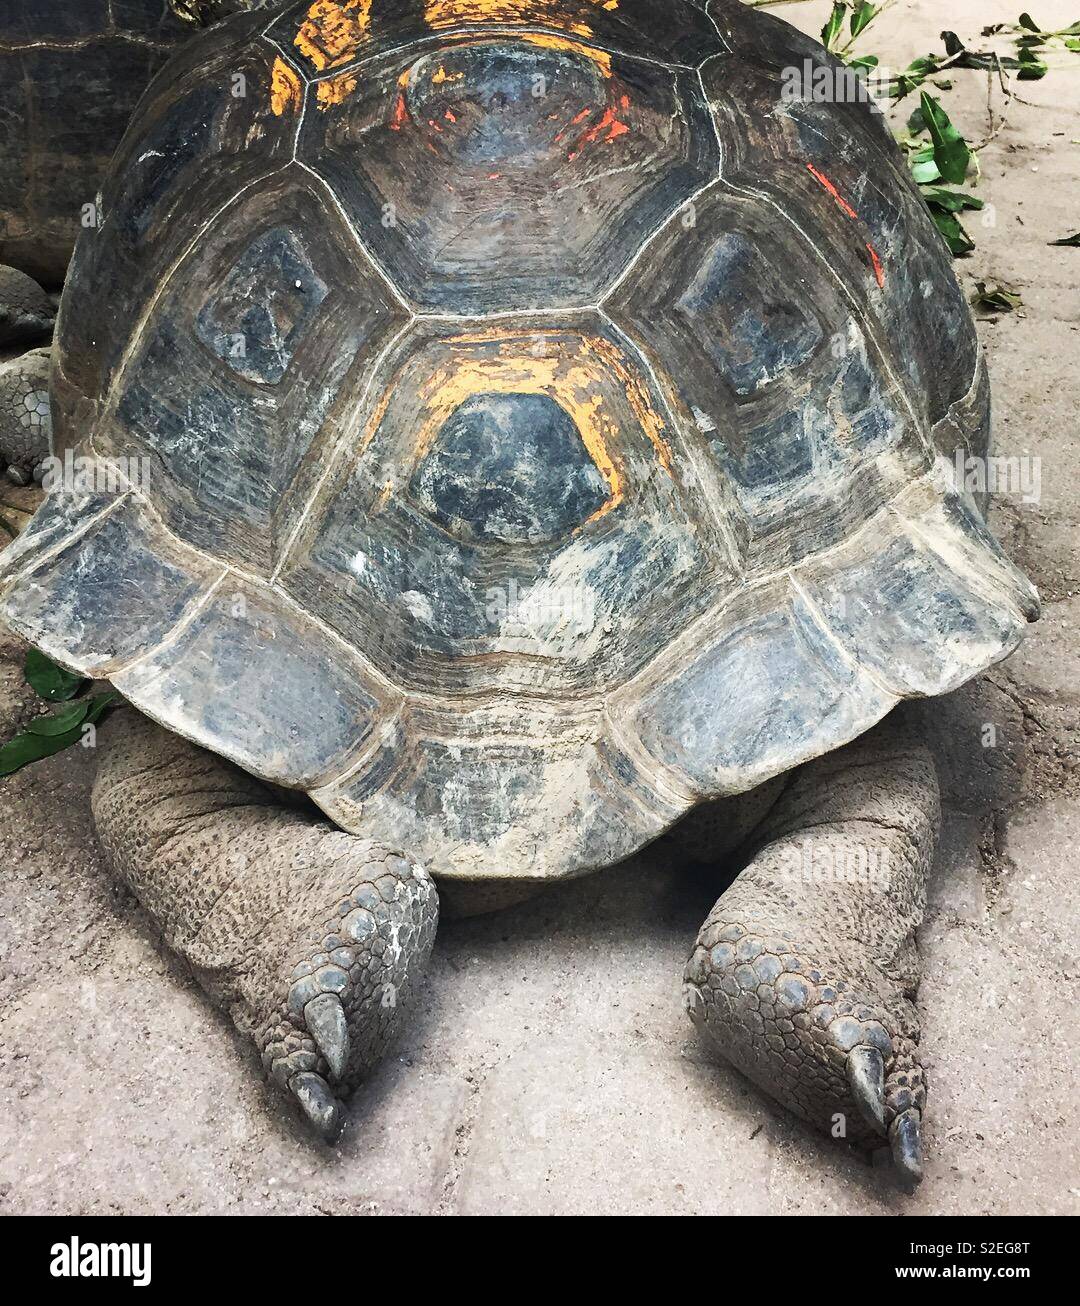 Giant tortoise, Seychelles, East Africa Stock Photo